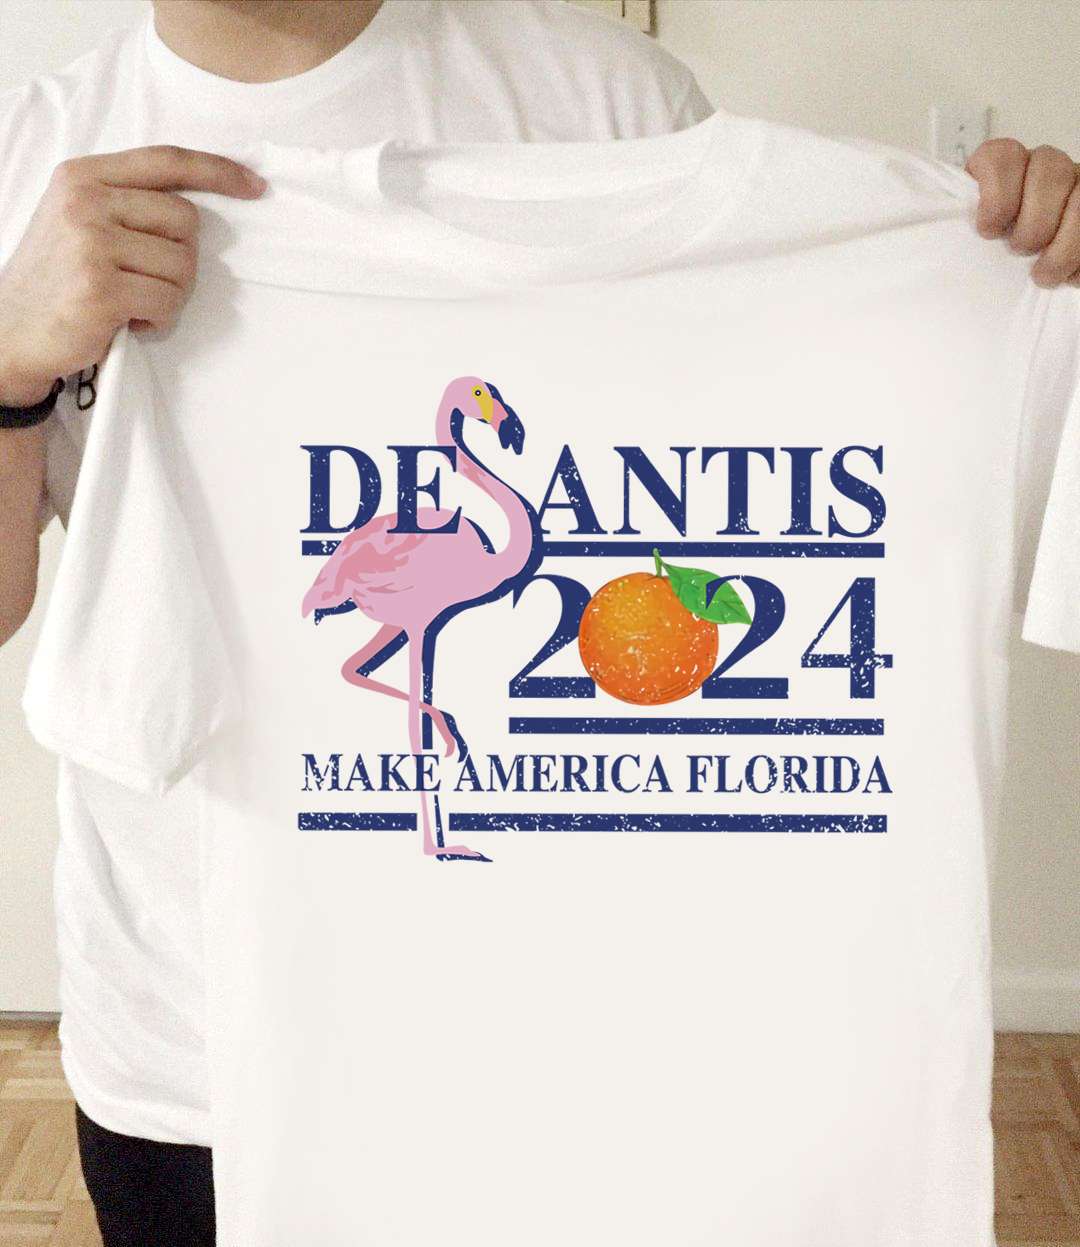 Desantis 2024, make America Florida - Flamingo Florida US state, Desantis Florida